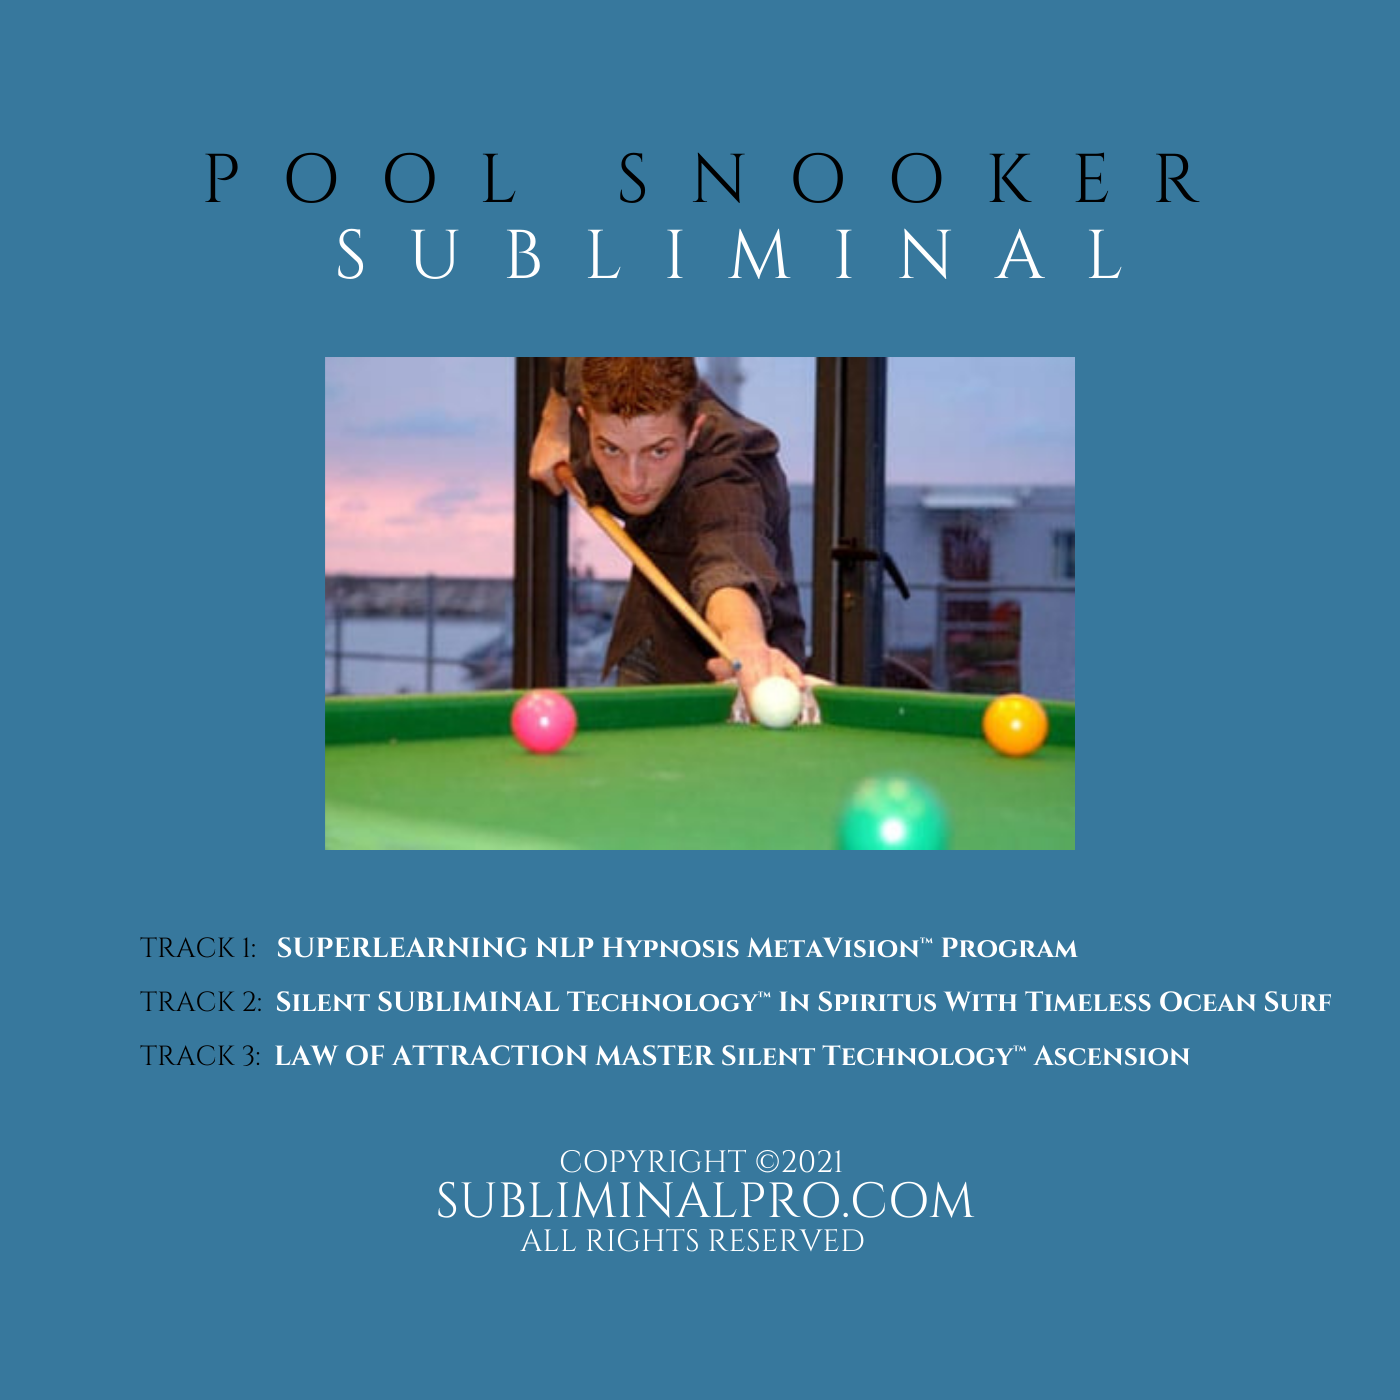 Pool Snooker Subliminal SUBLIMINAL PRO™ AUDIO